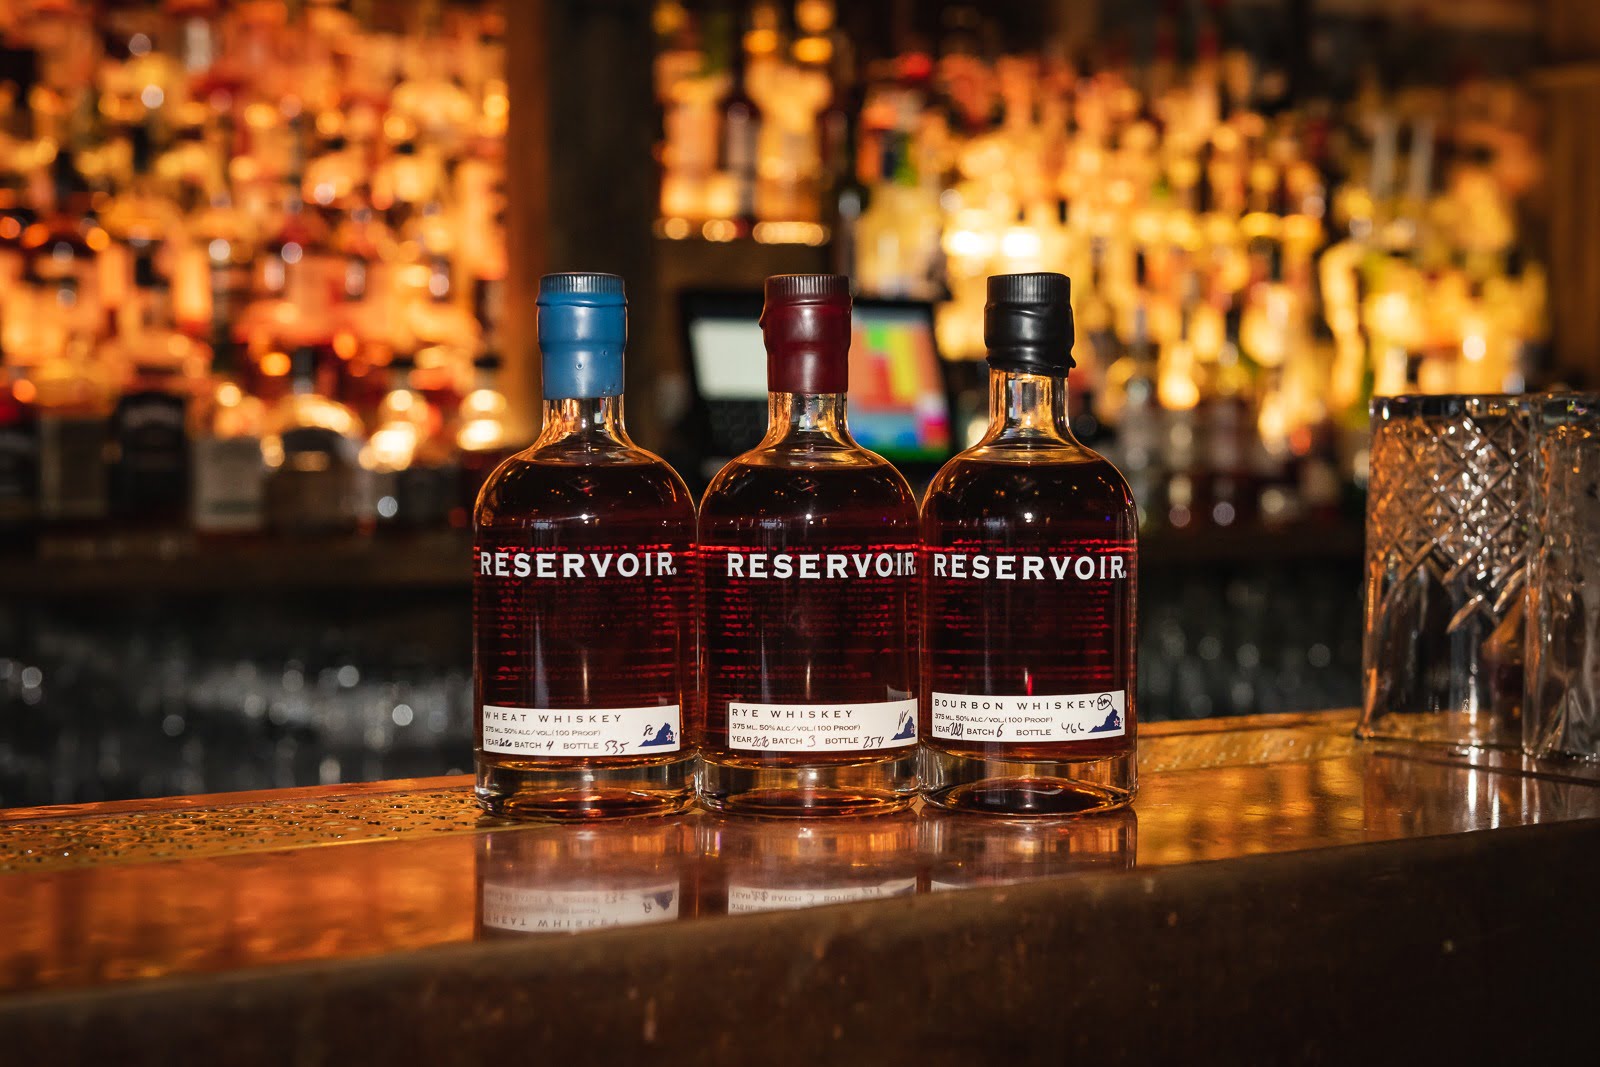 Three Bottles of Reservoir Bourbon Whiskey on the NOLA Bar